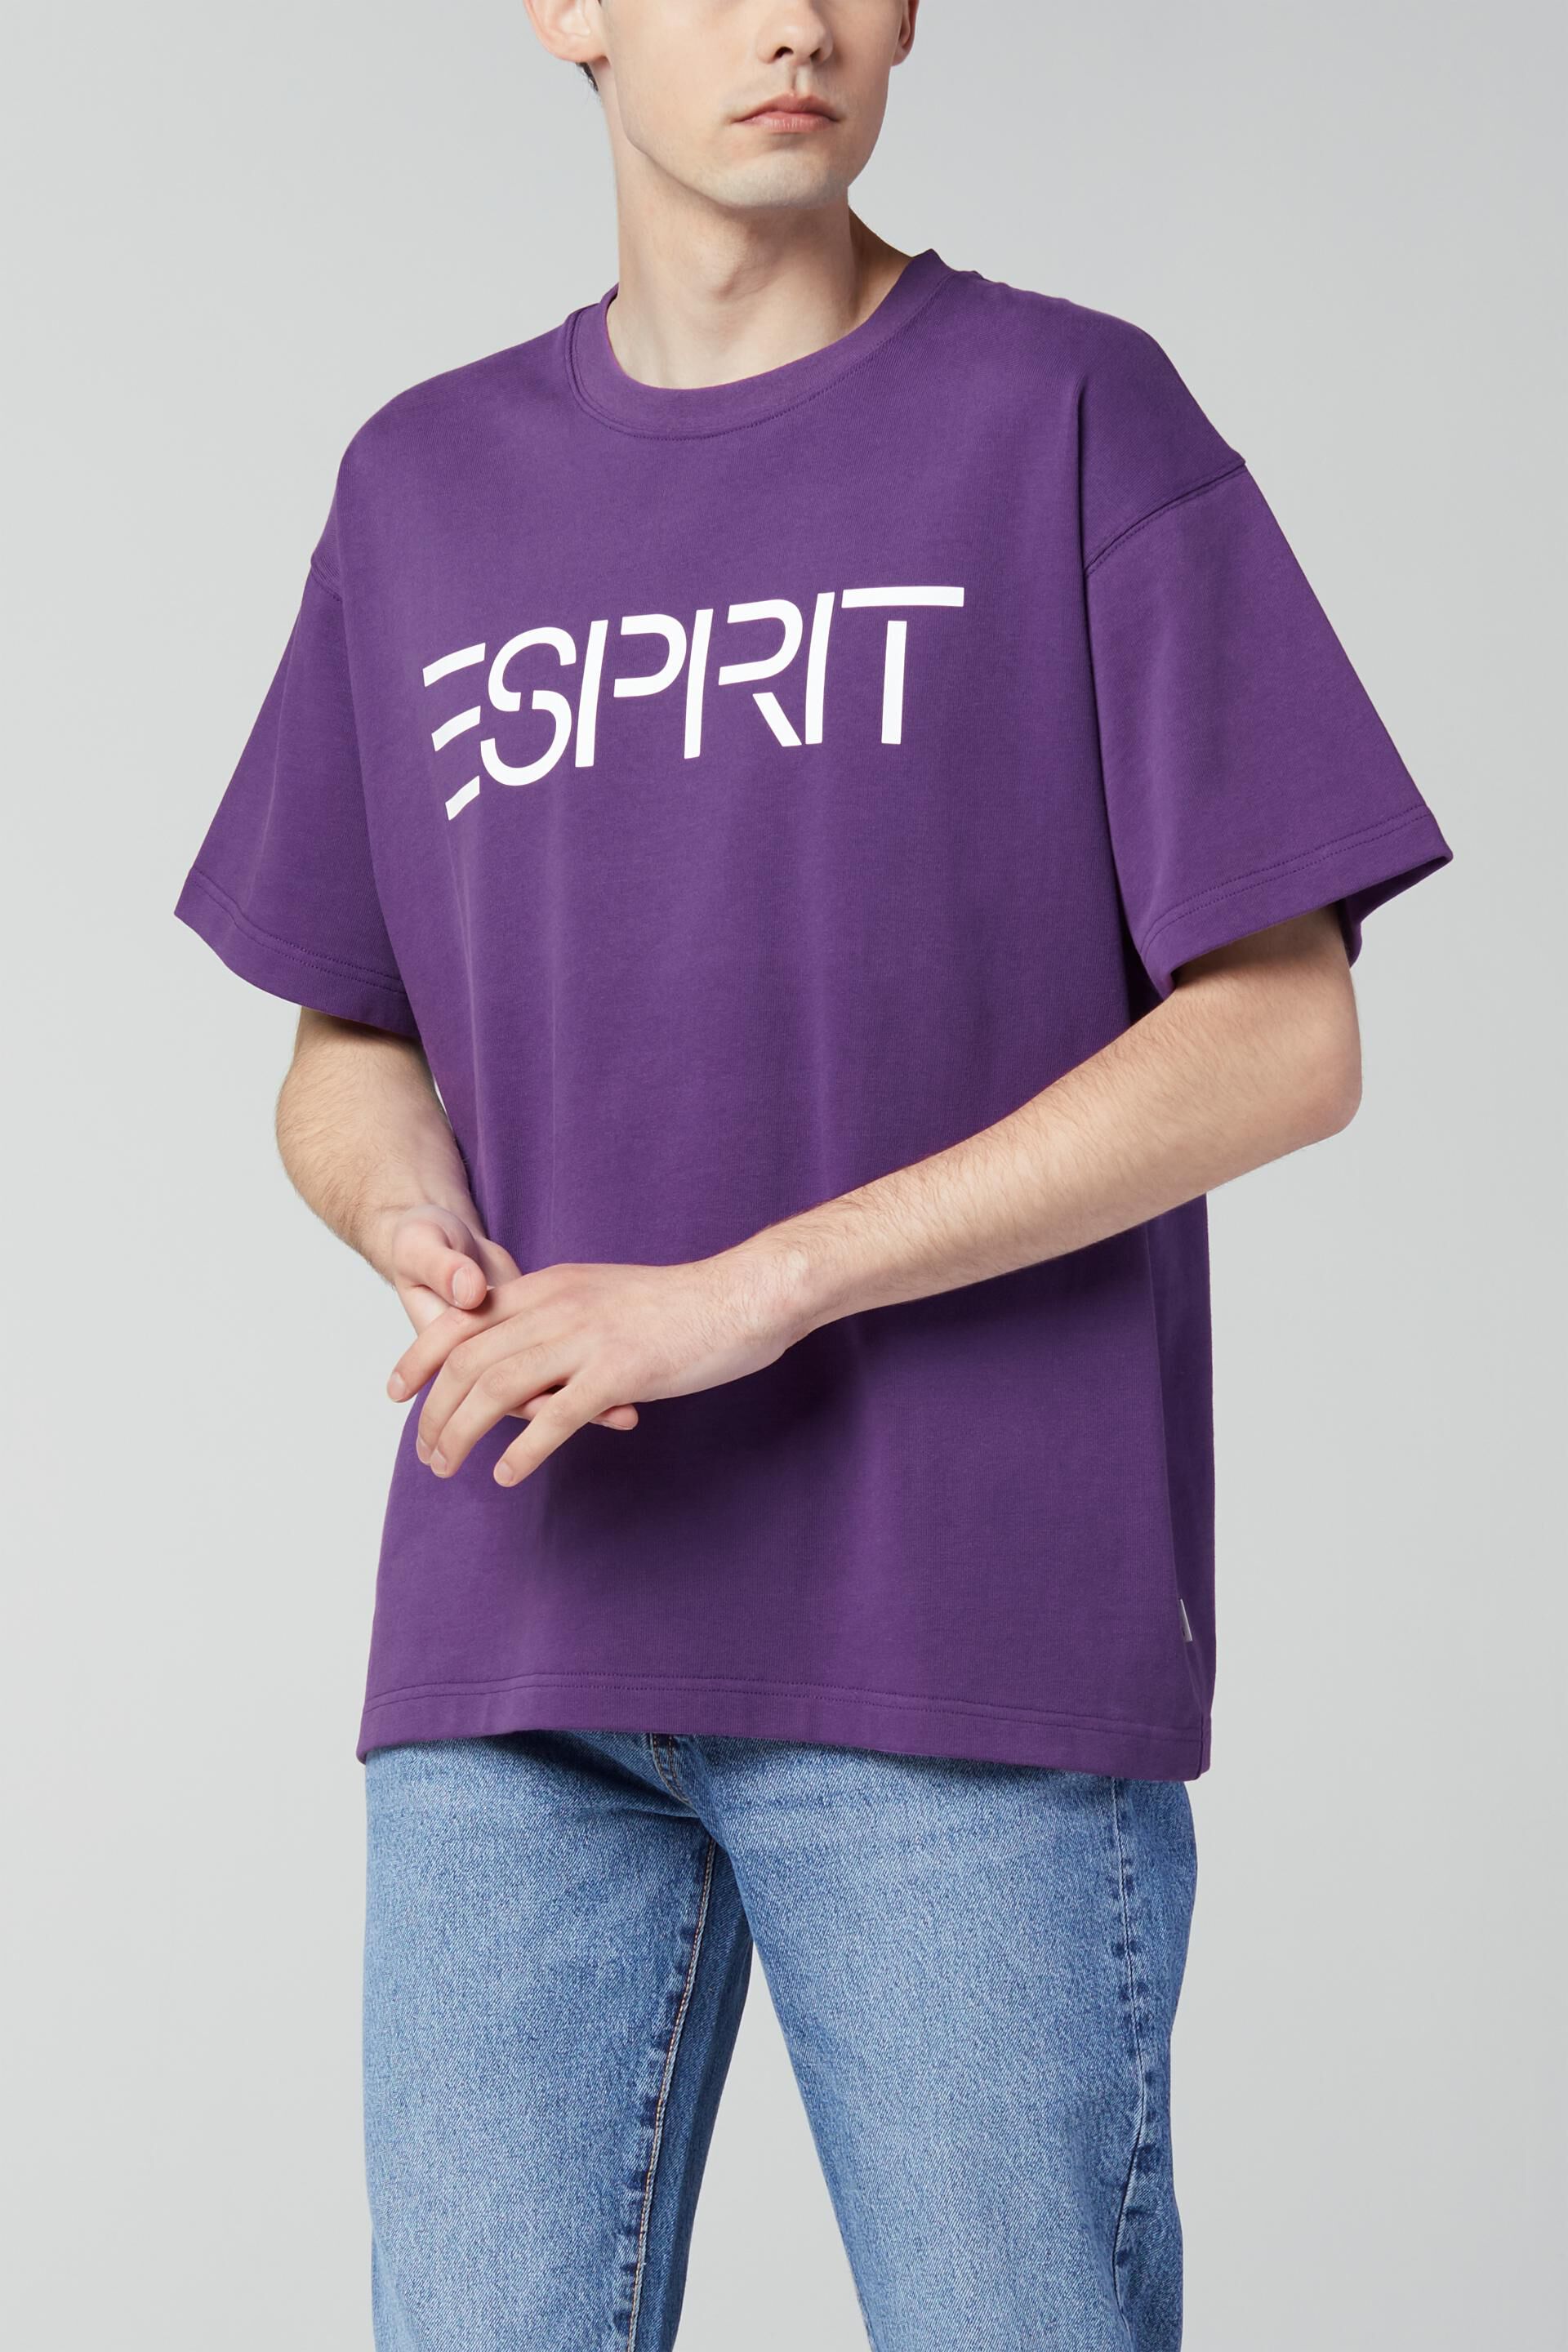 Esprit logo a print with T-shirt Unisex